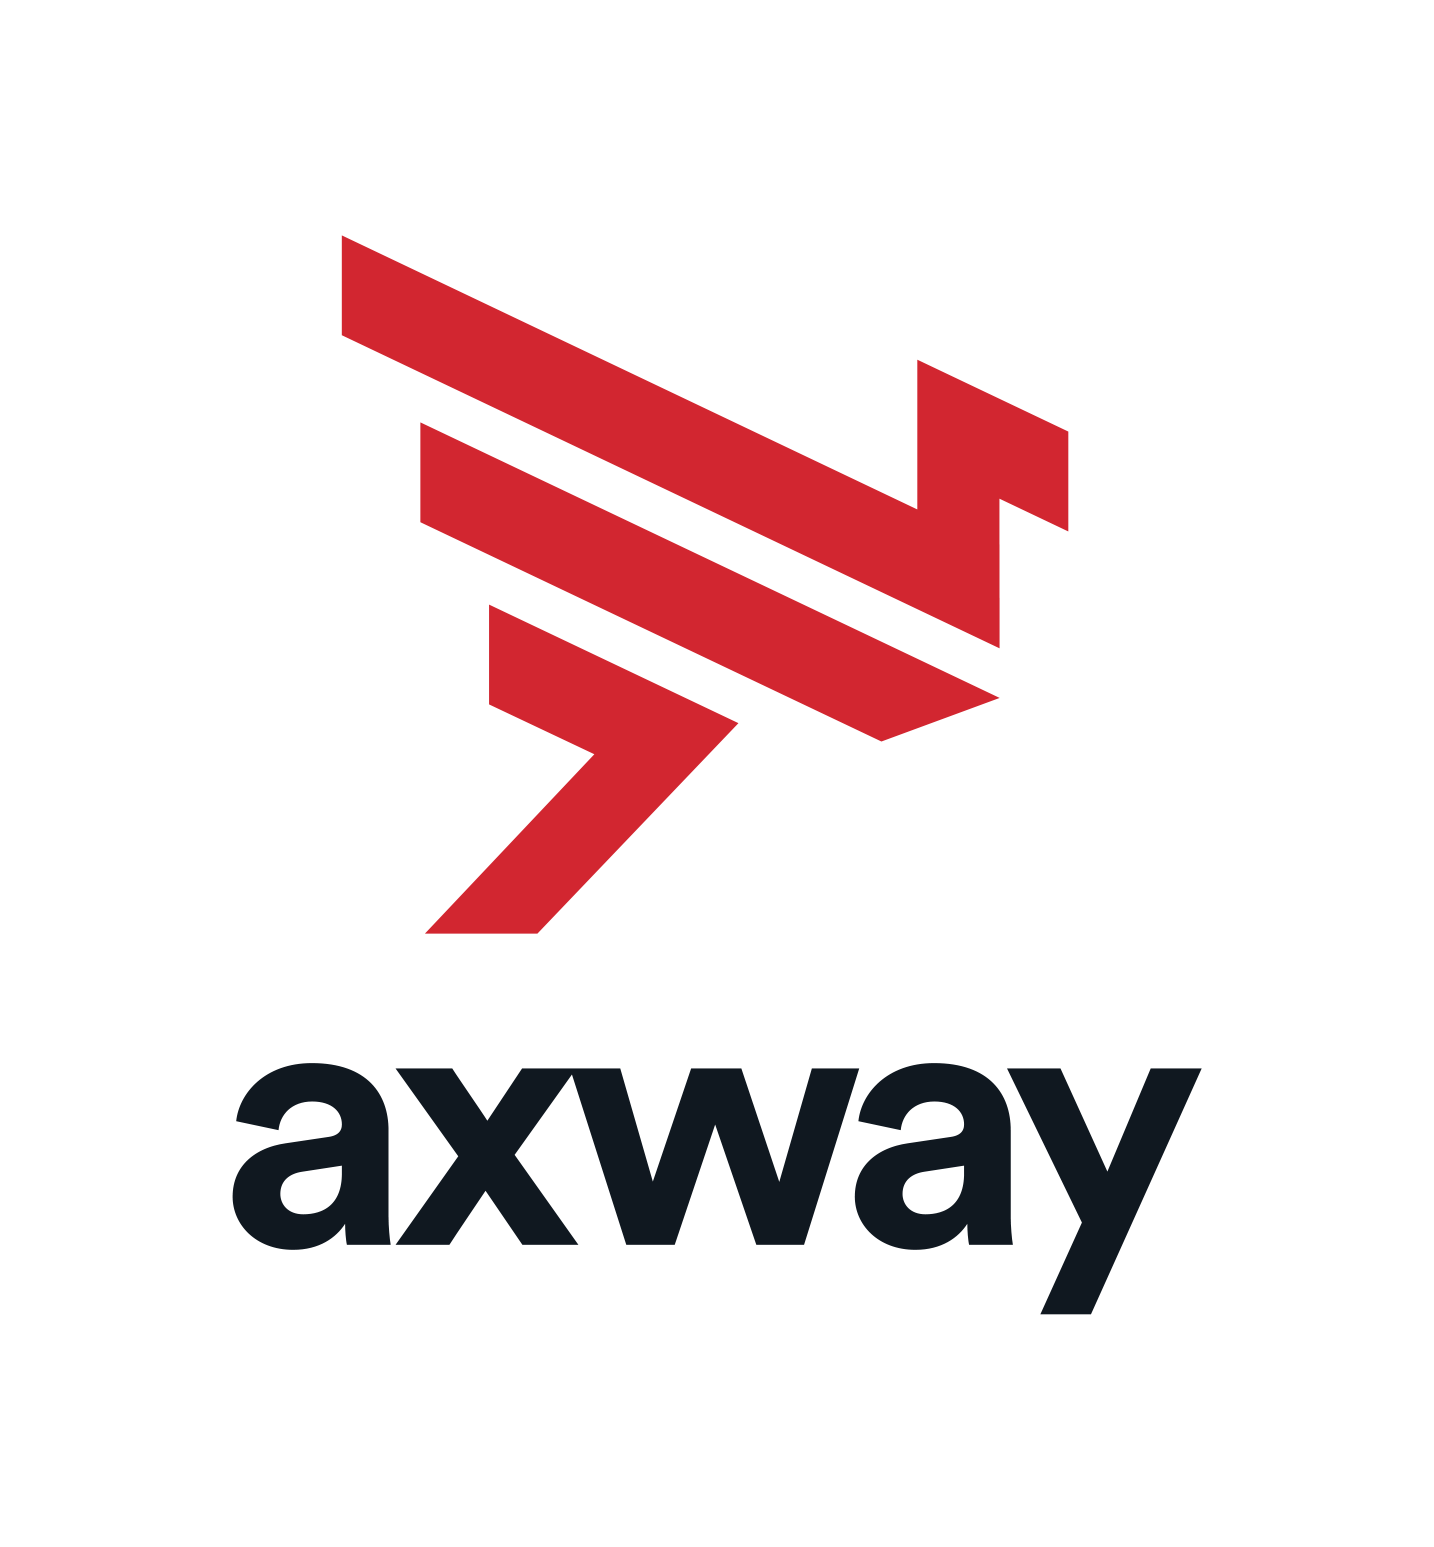 Axway Partners